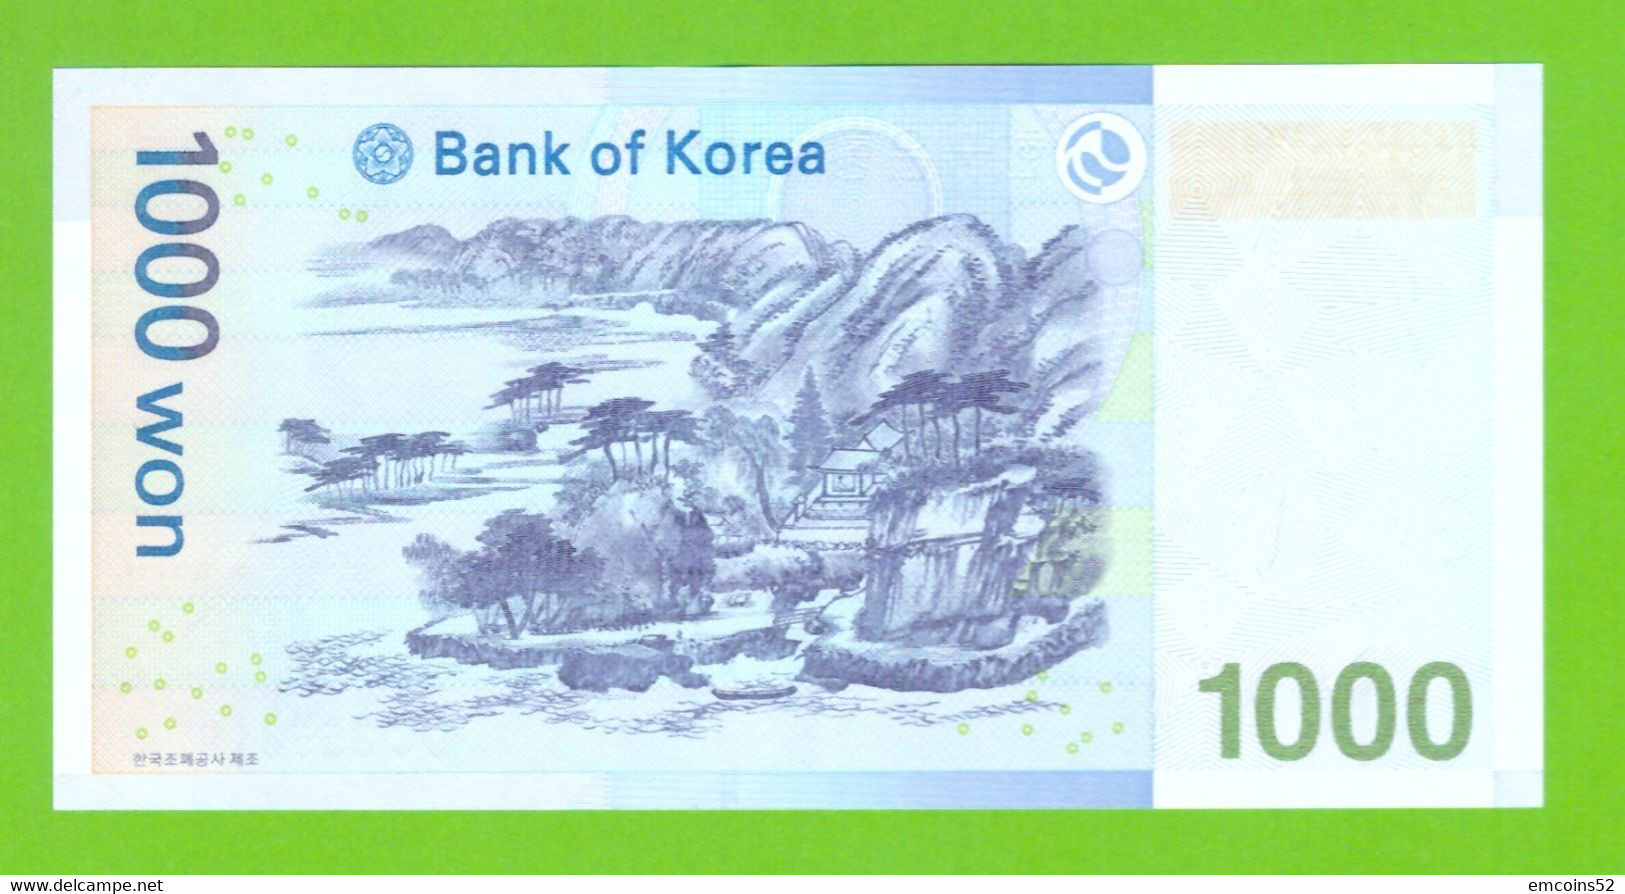 KOREA SOUTH 1000 WON 2007  P-54 UNC - Korea, South